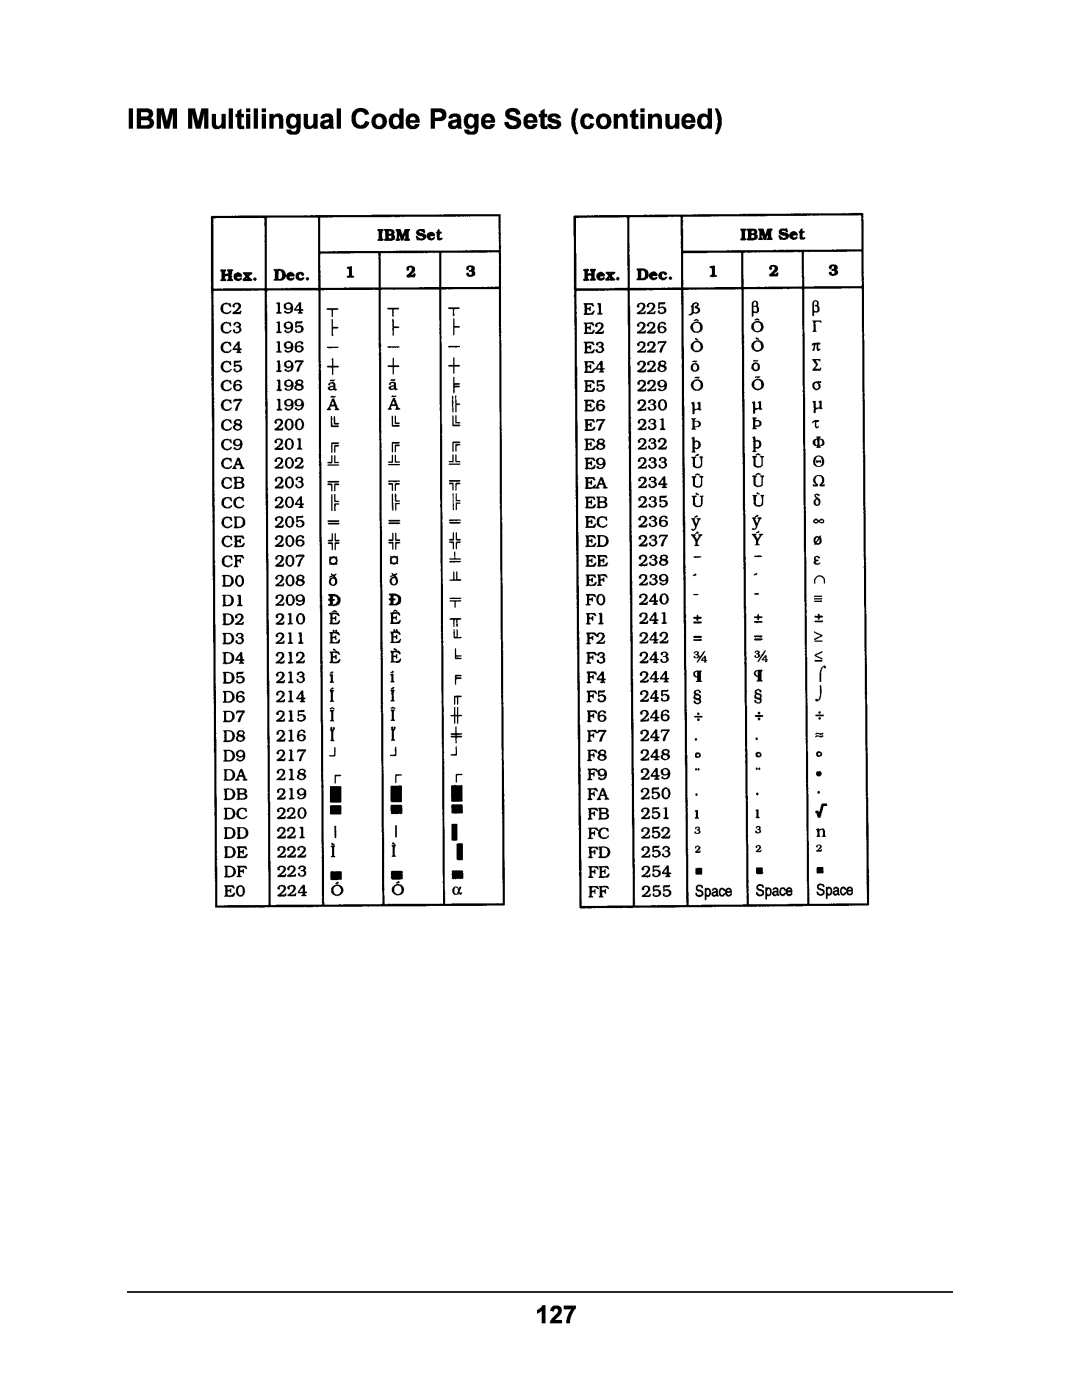 Oki 4410 manual IBM Multilingual Code Page Sets continued 